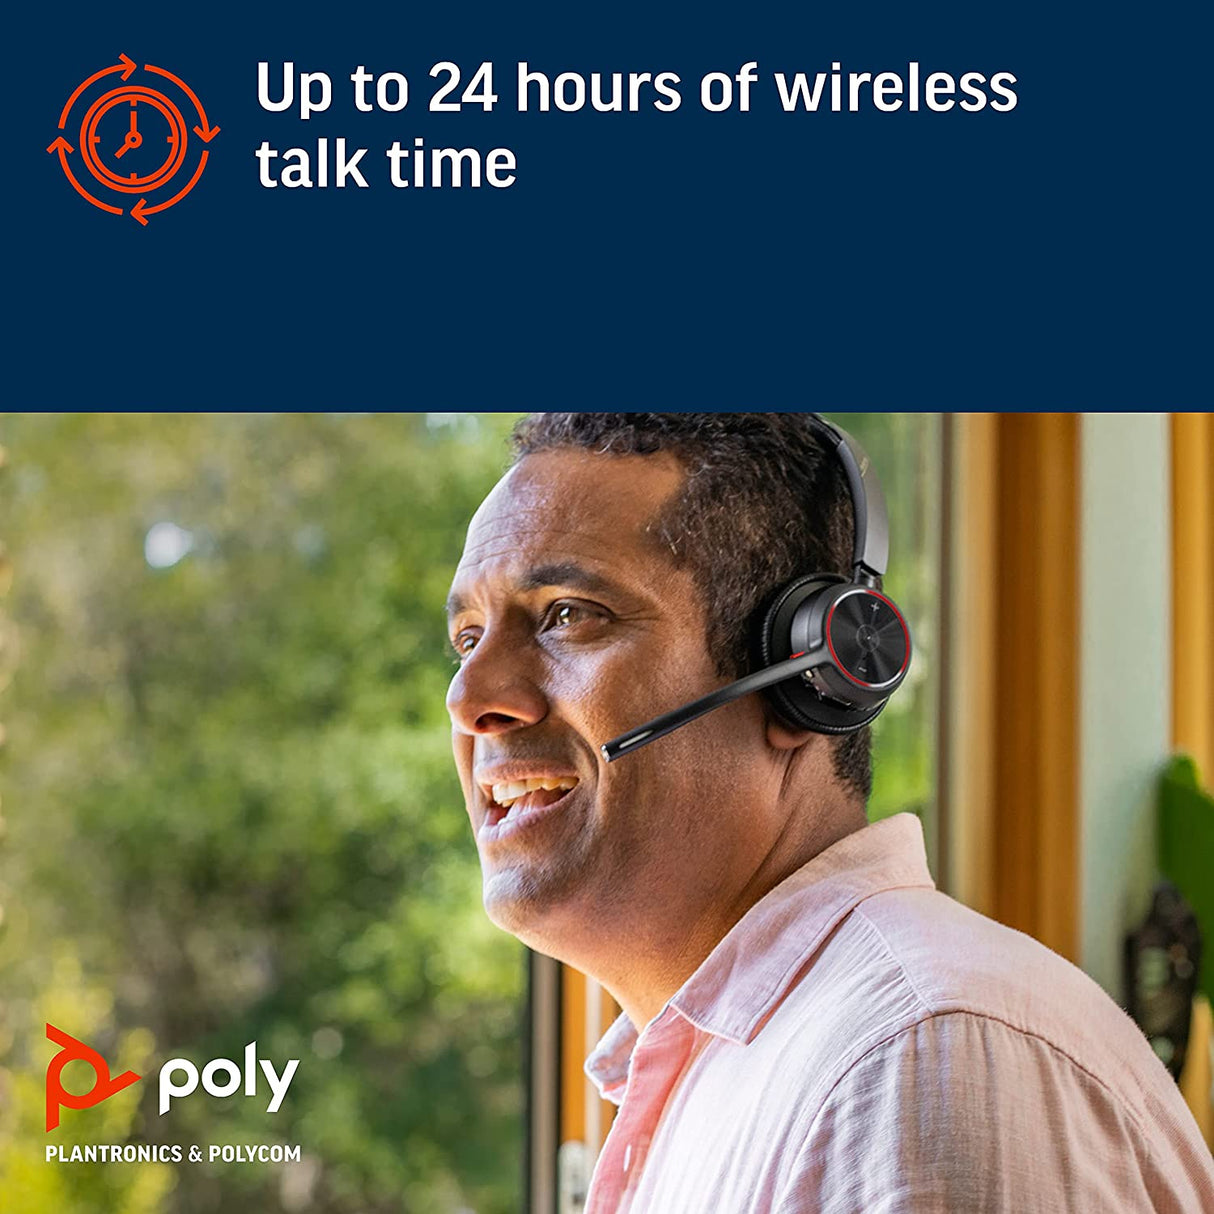 Poly (Plantronics + Polycom) Voyager 4310 UC Wireless Headset (Plantronics)-Single-Ear Headset w/Mic-Connect to PC/Mac via USB-A Bluetooth Adapter,Cell Phone via Bluetooth,Black,218470-02 USB-A Headset (Teams Version)